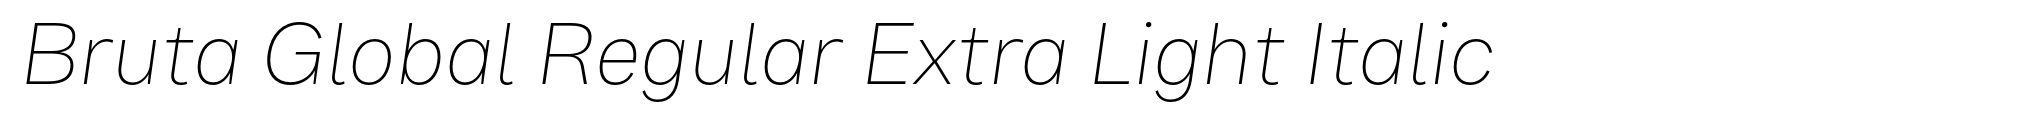 Bruta Global Regular Extra Light Italic image